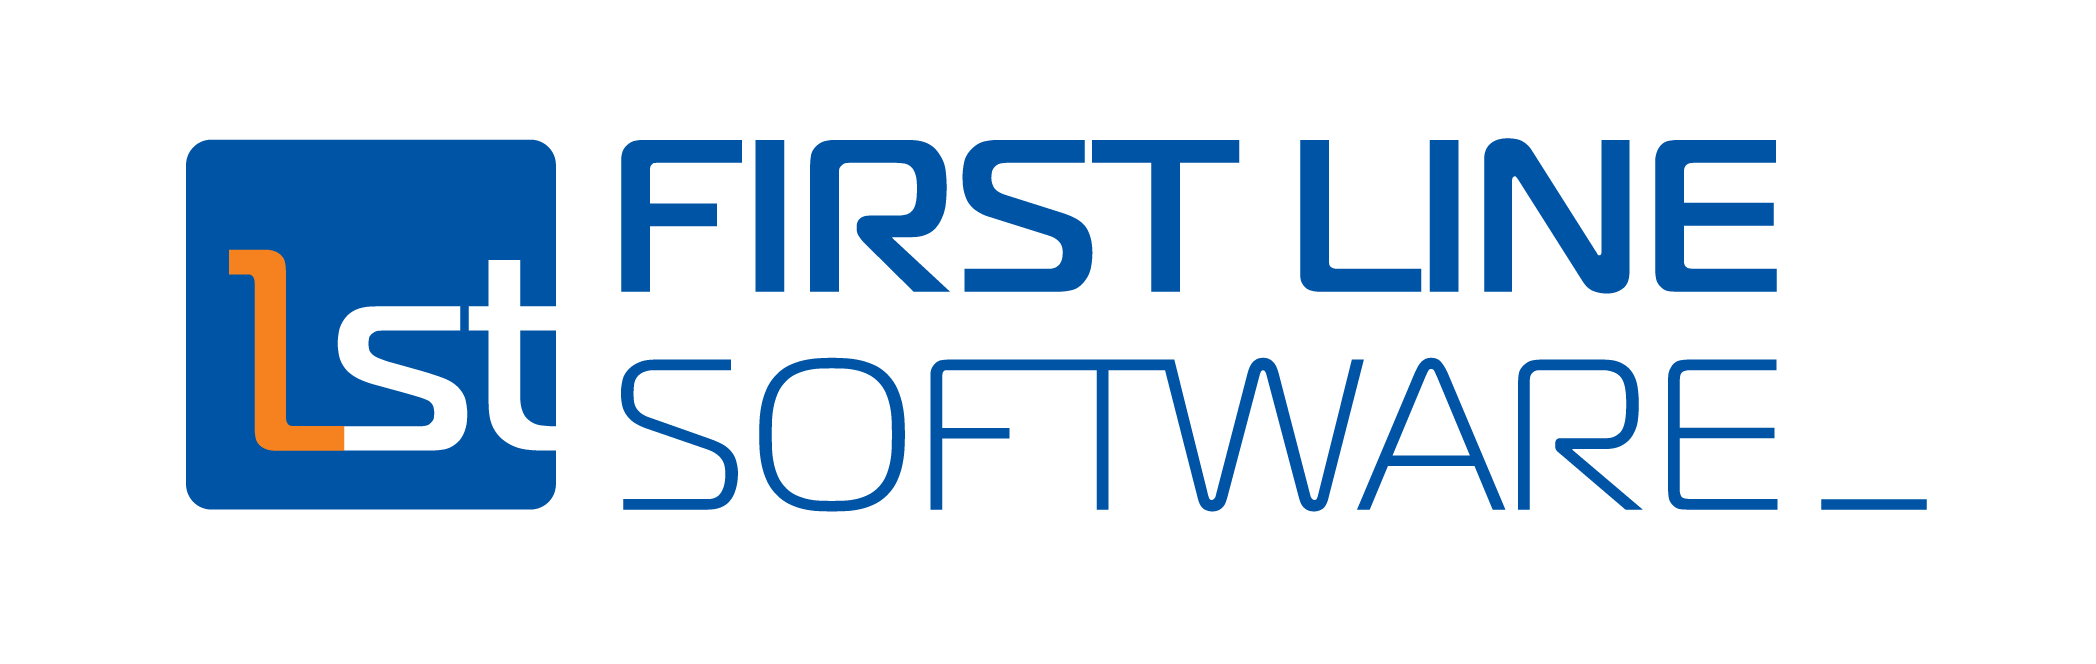 First line. Software компания. Line software. One line логотип компания.